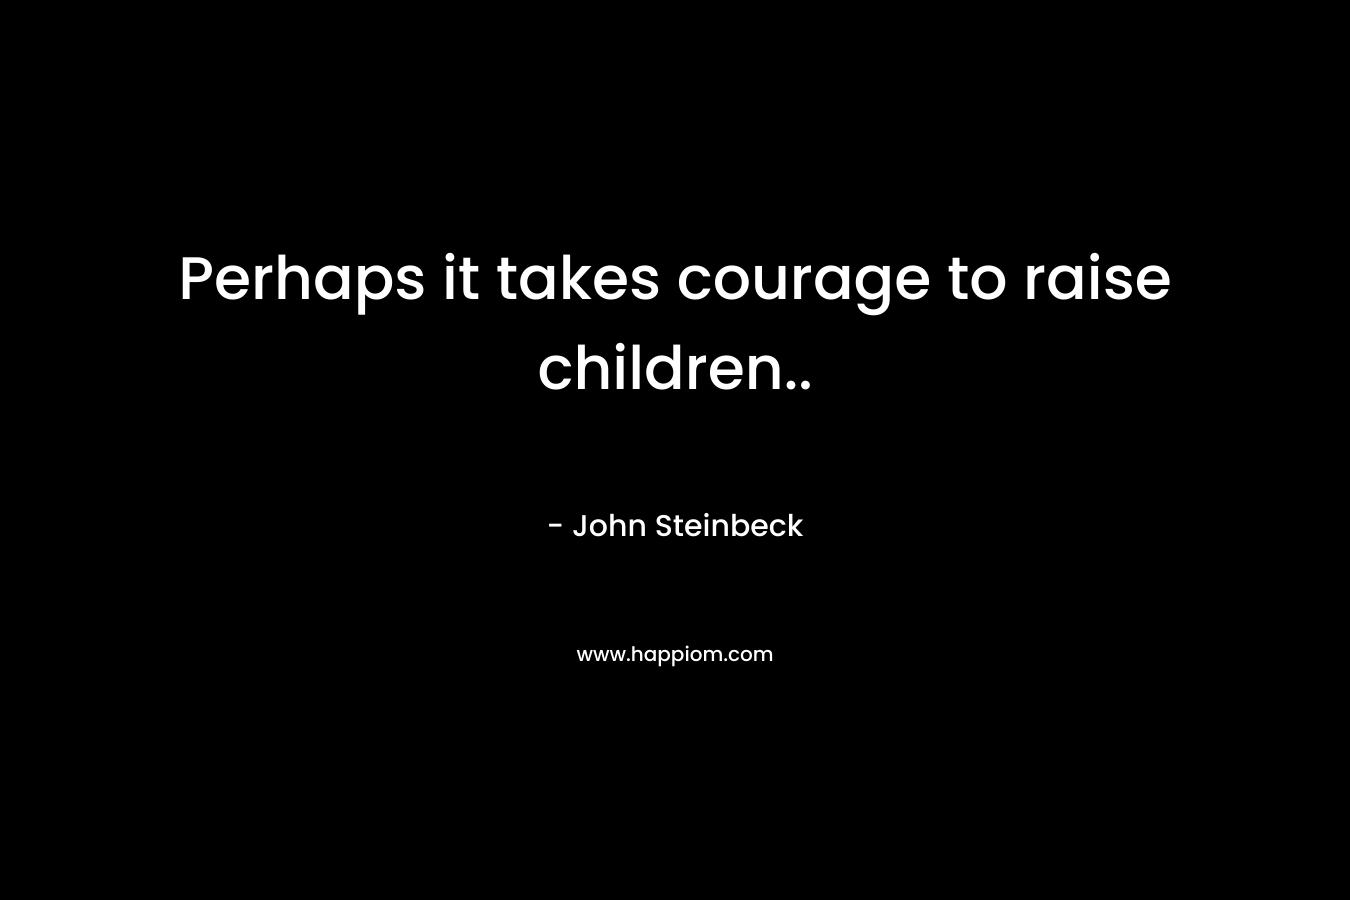 Perhaps it takes courage to raise children..